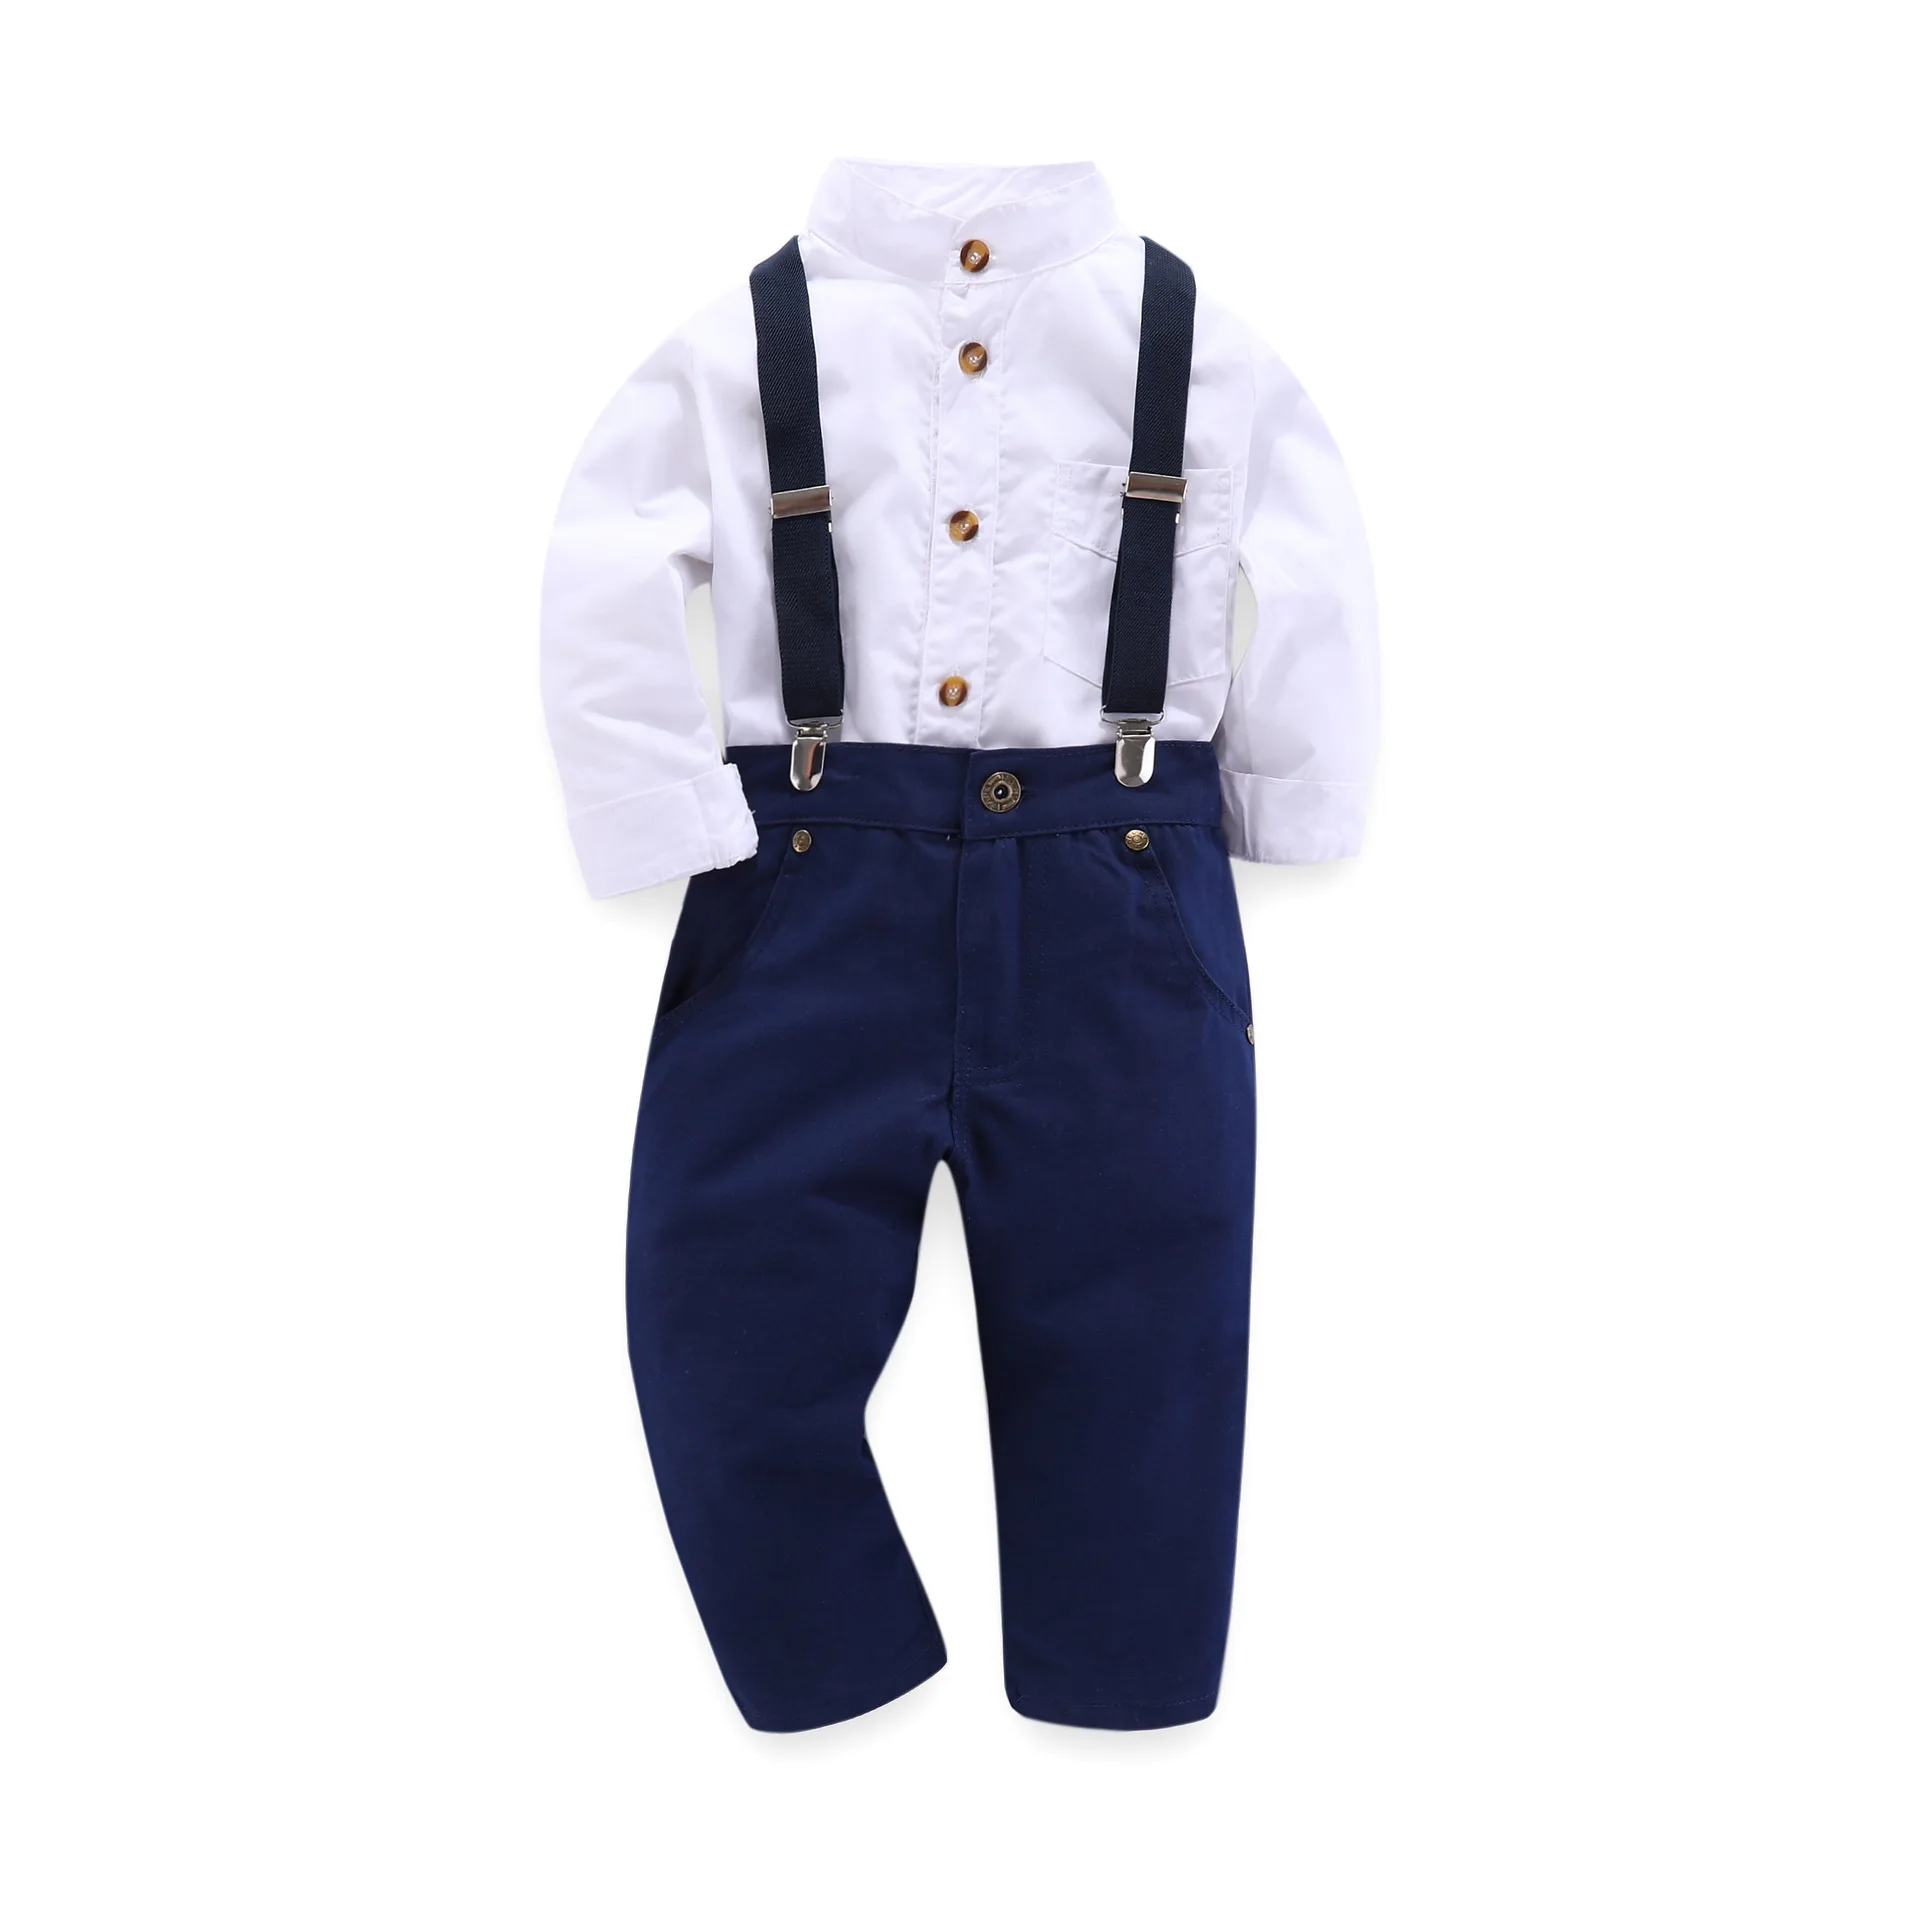 

Gentleman Baby Boy Clothing Sets Shirt Bib Trousers Clothes Set Boys British style Baby Boys' Clothing Sets, Dark blue, yellow